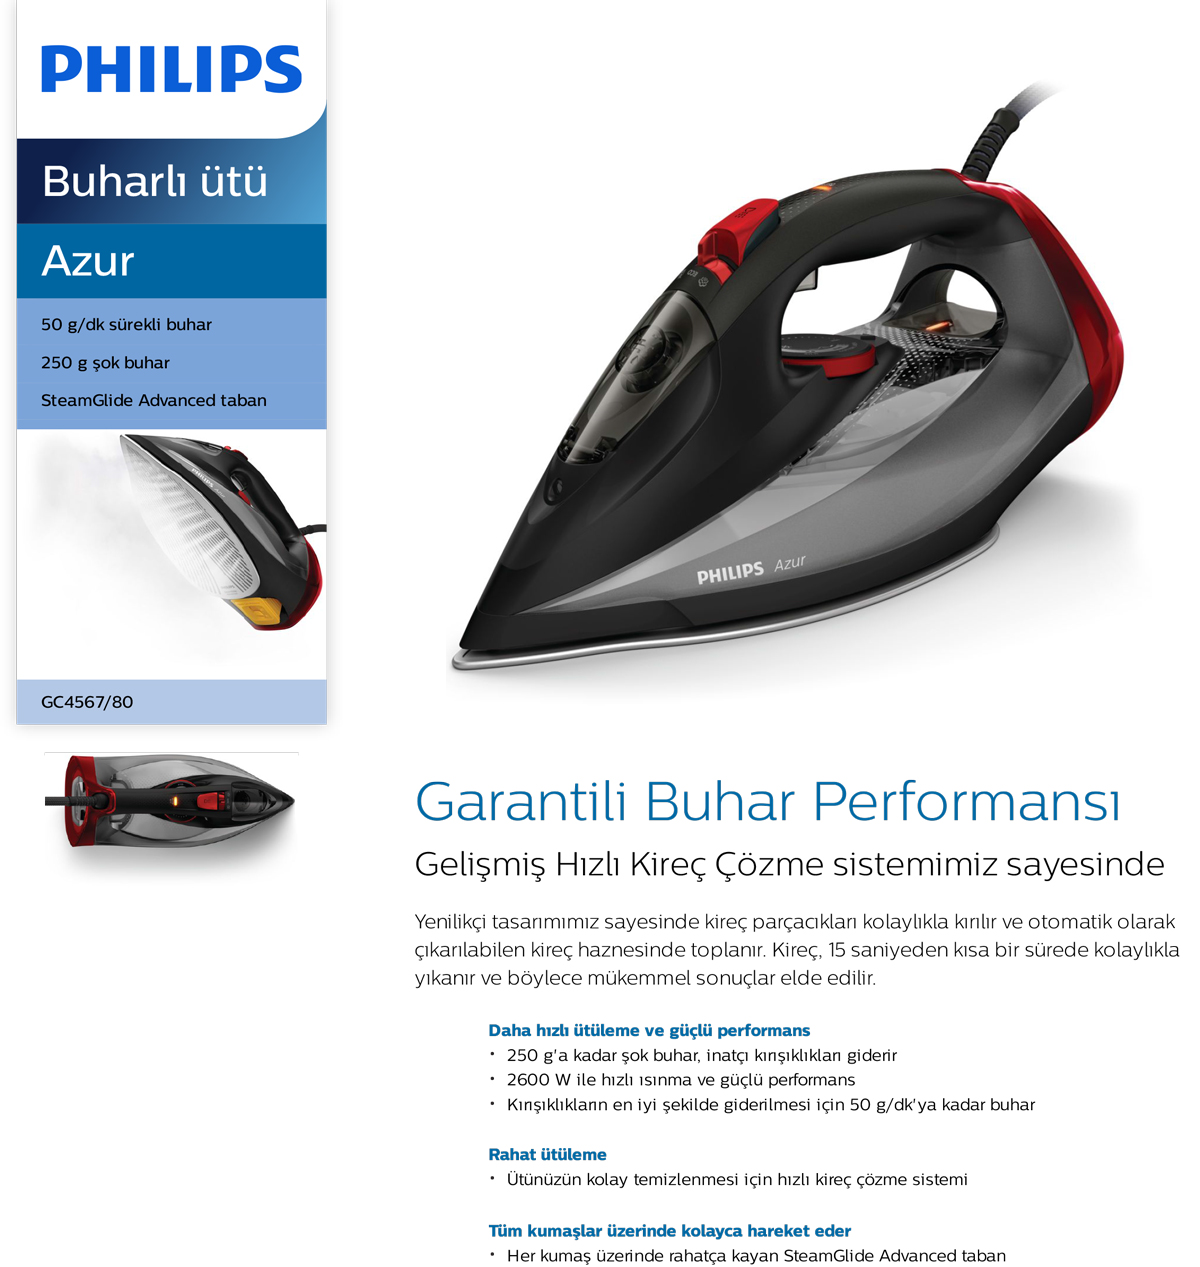 Philips azur 4567. Philips gc4567/80 Azur. Утюг Philips gc4567, 80. Утюг Philips Azur gc4567/80, черный.